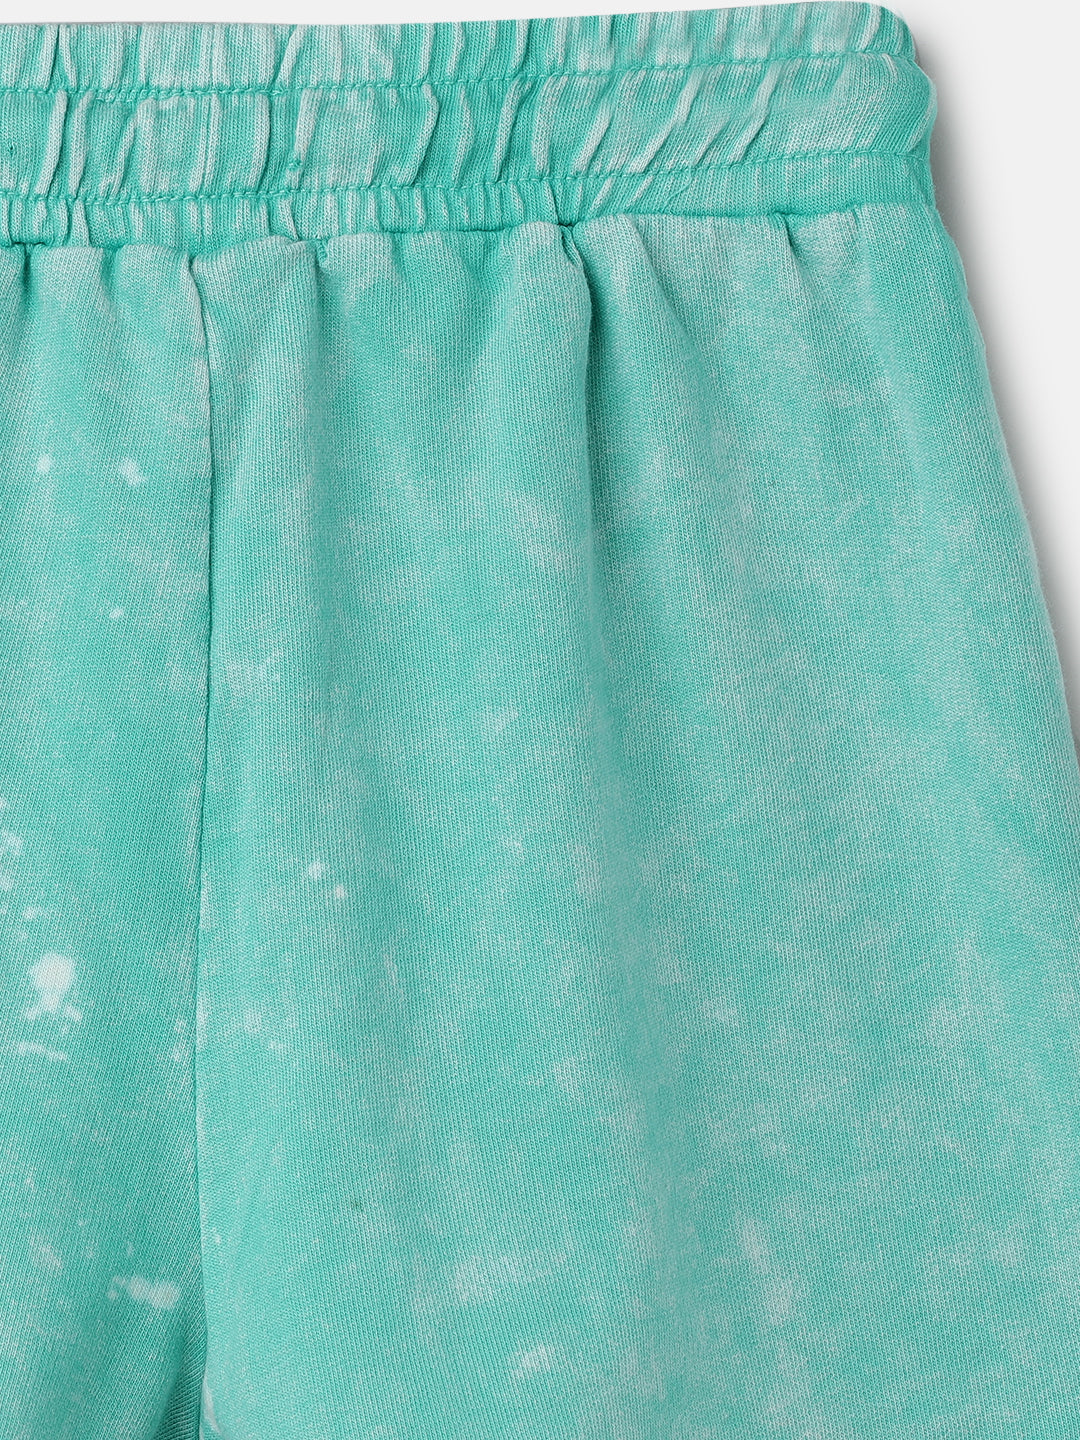 Girls Acid Wash Solid Peacock Green Shorts